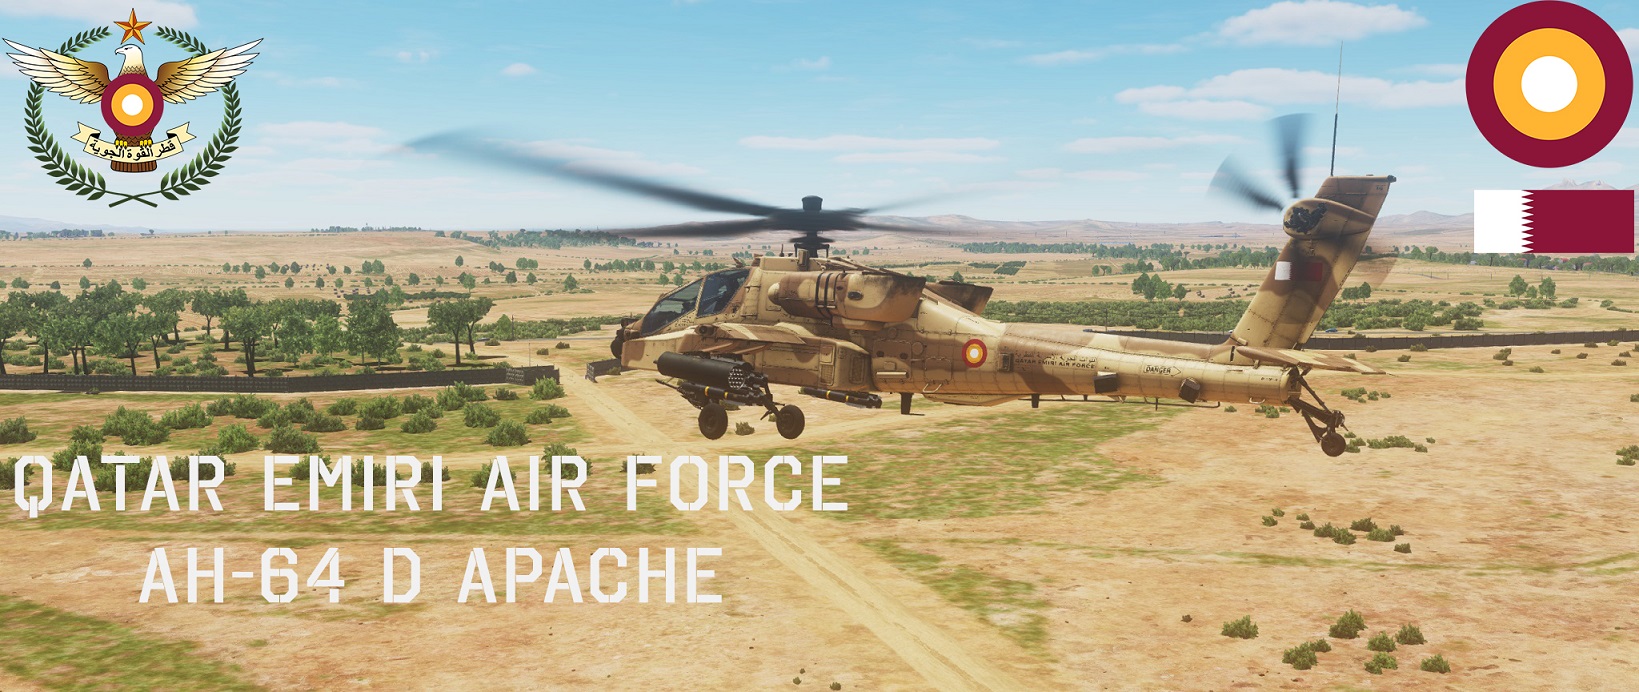 AH-64 D QATAR EMIRI AIR FORCE (Now part of the Official Skins) 